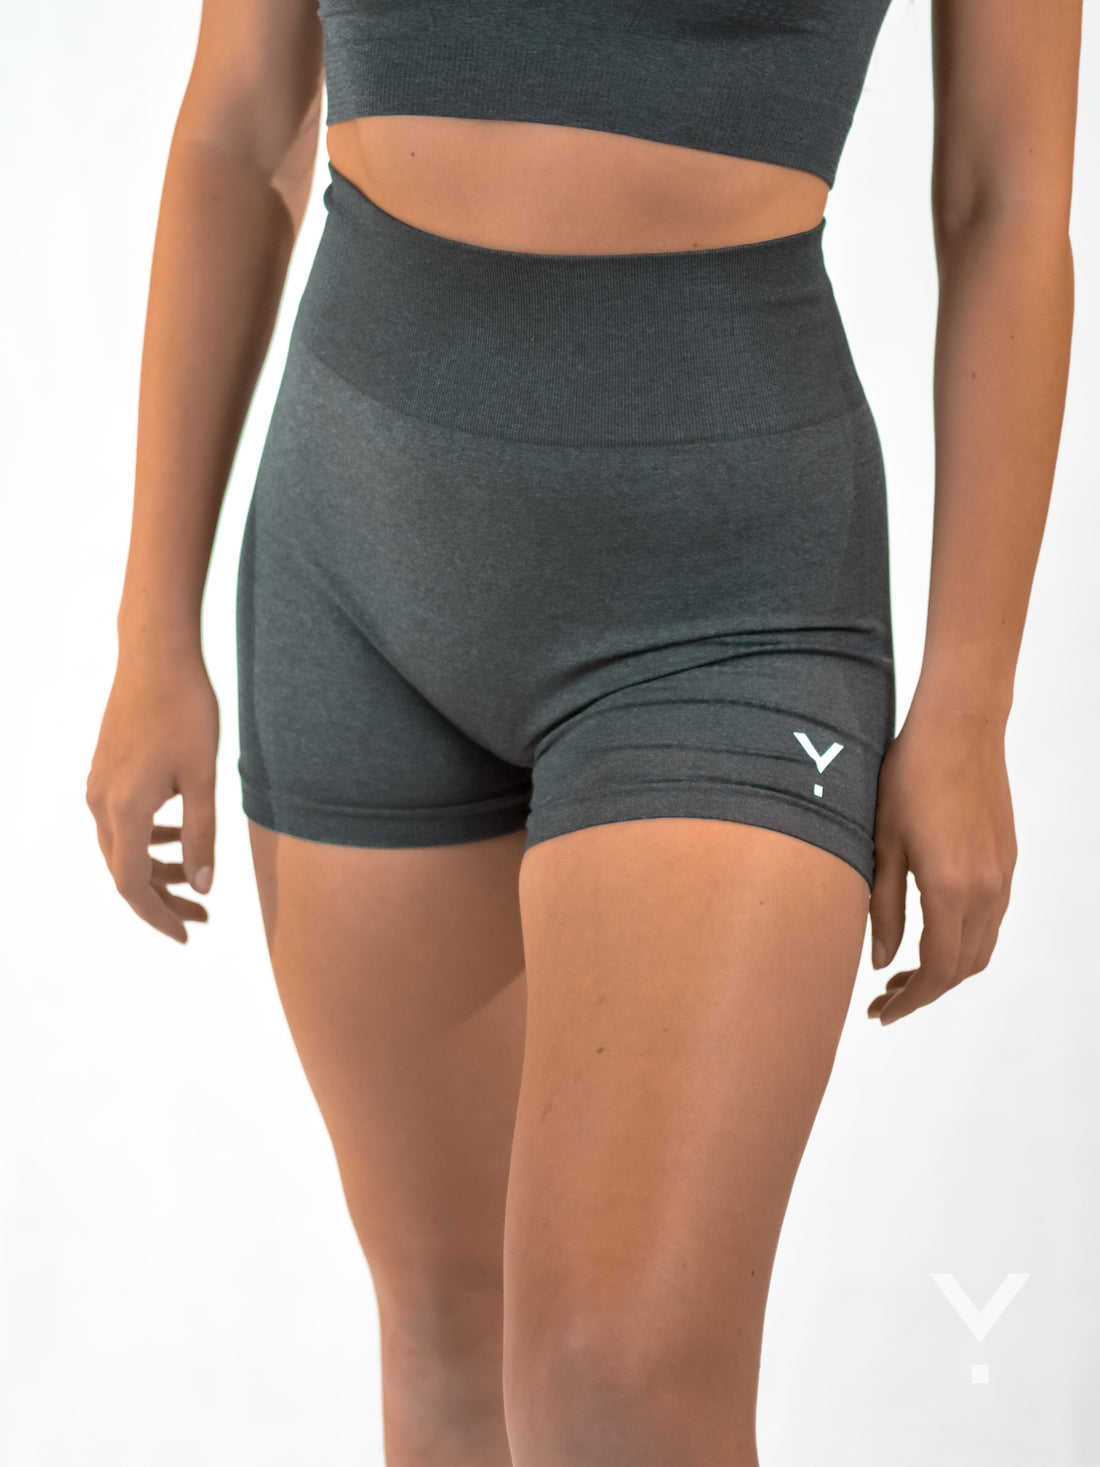 Reflex Shorts Black - Womens Shorts | AVAYOS